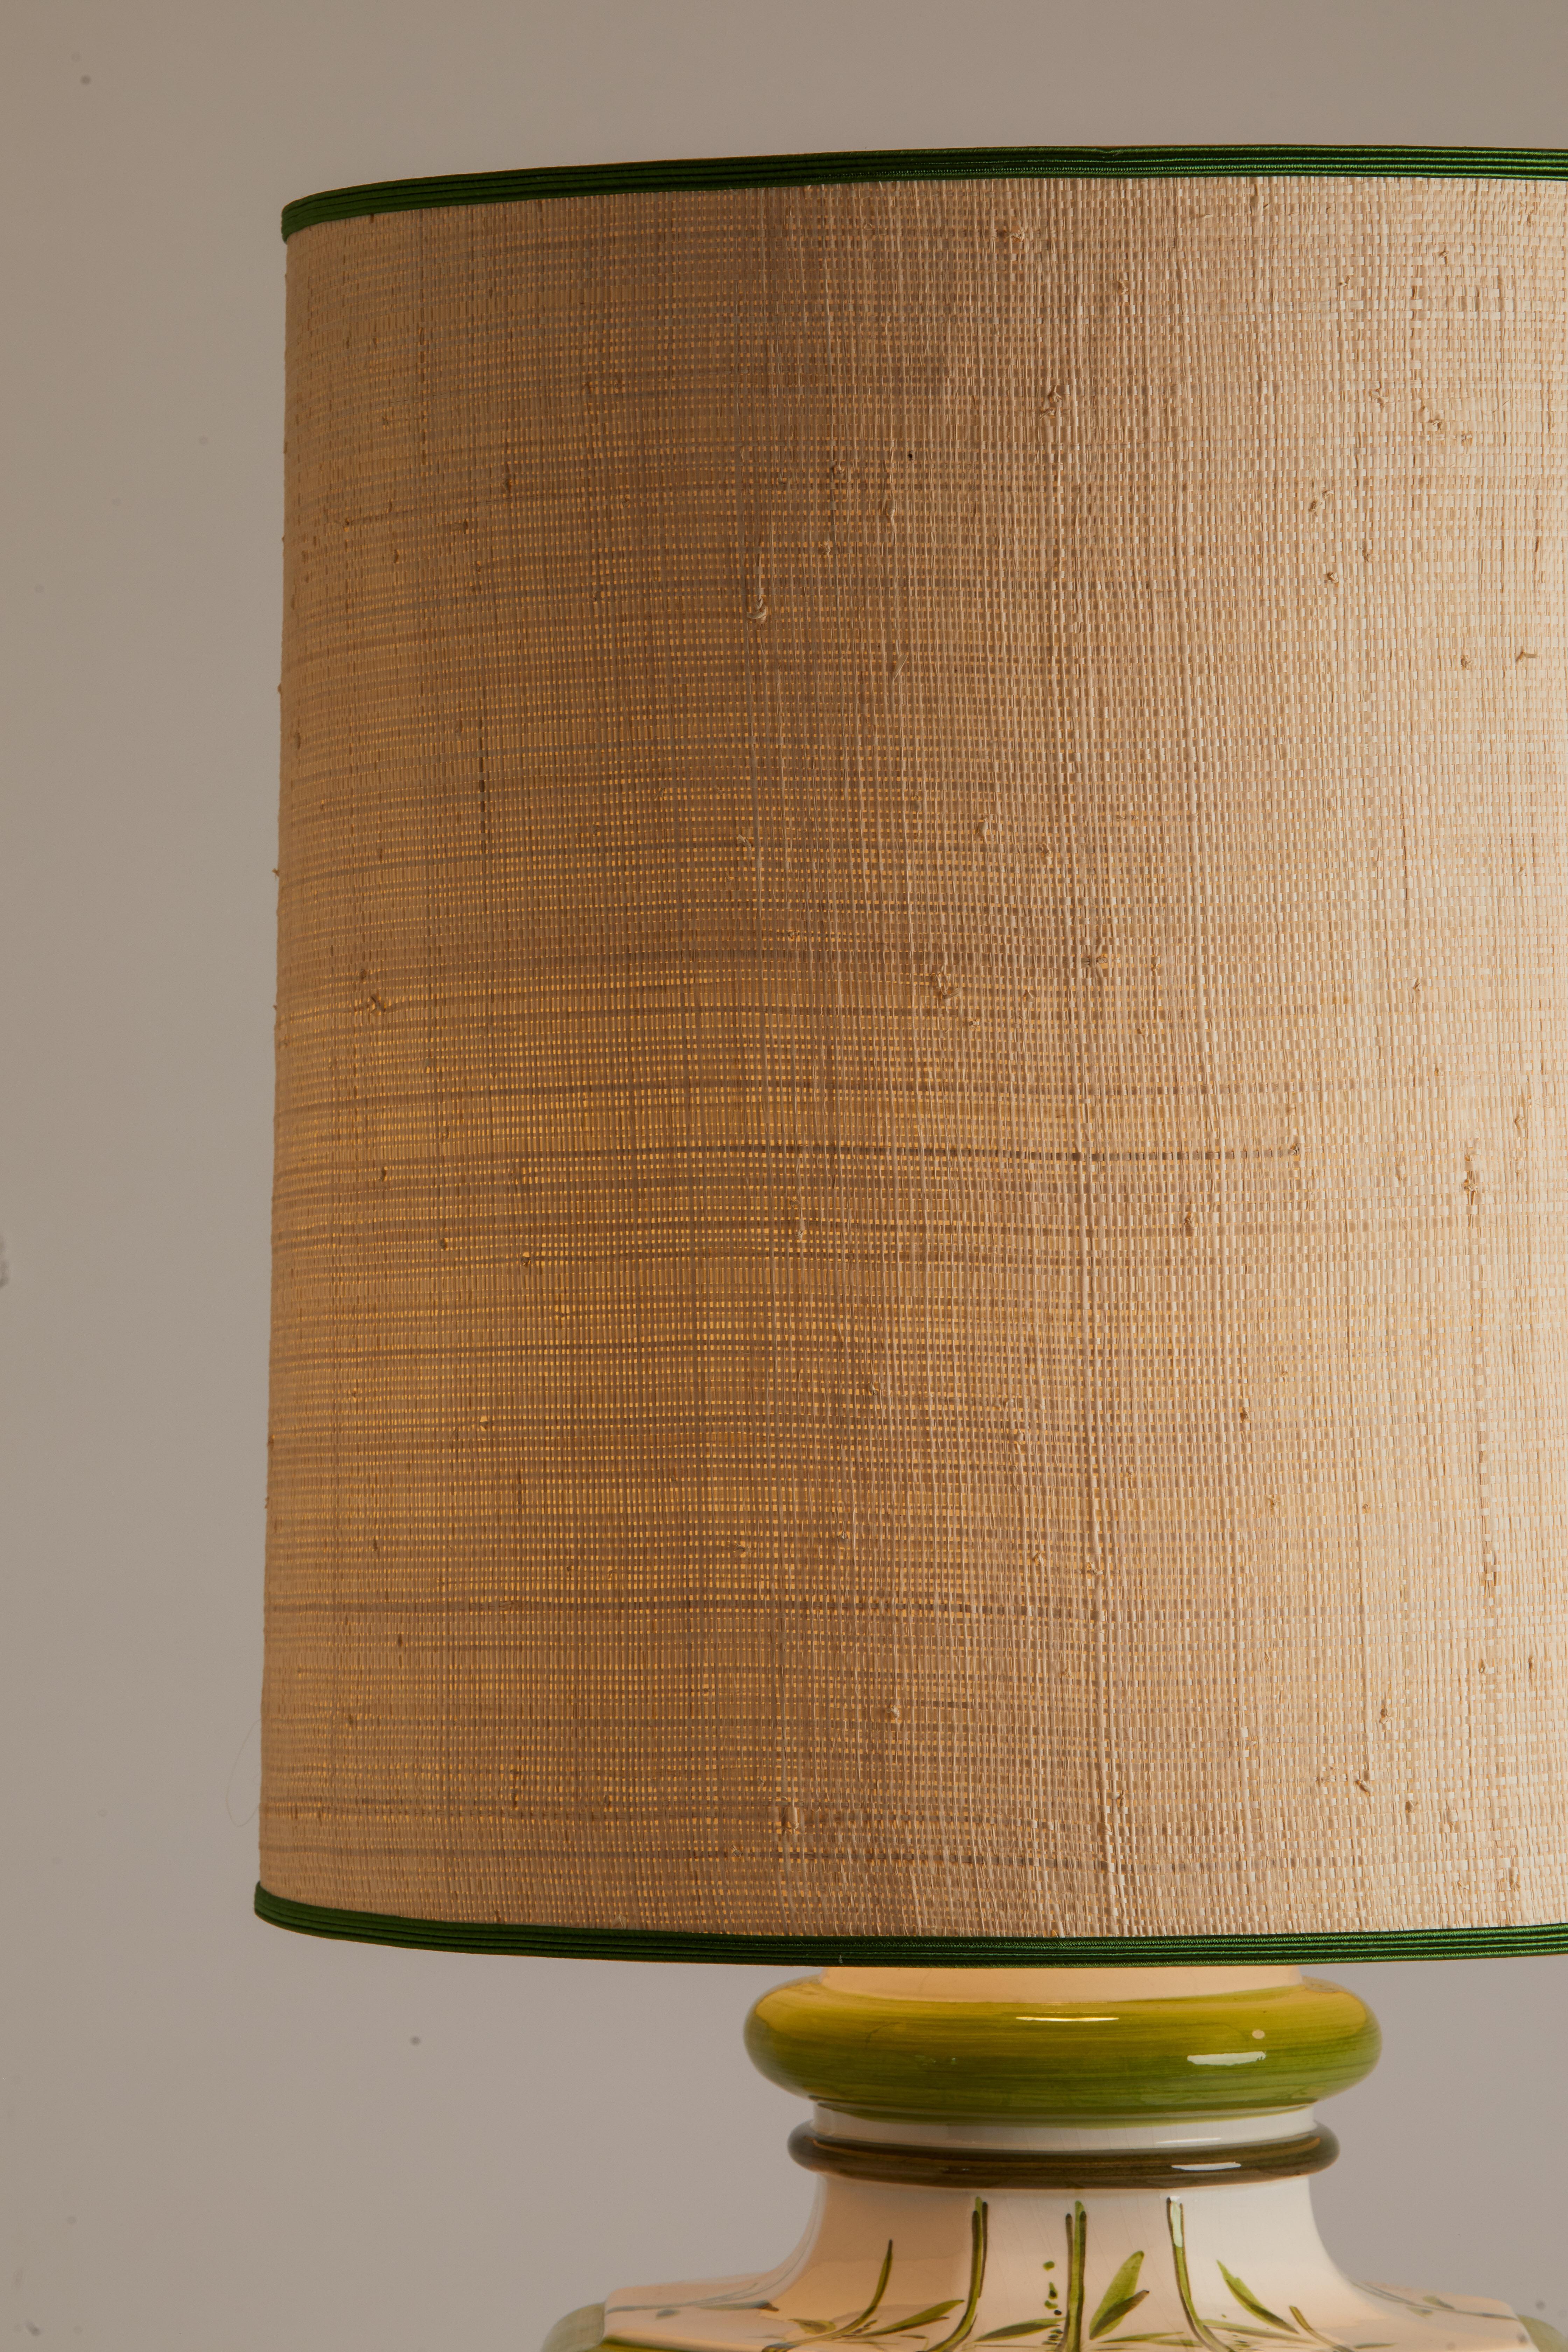 Italian 1970's pottery lamp with beautifully detailed bamboo motif and custom shade.